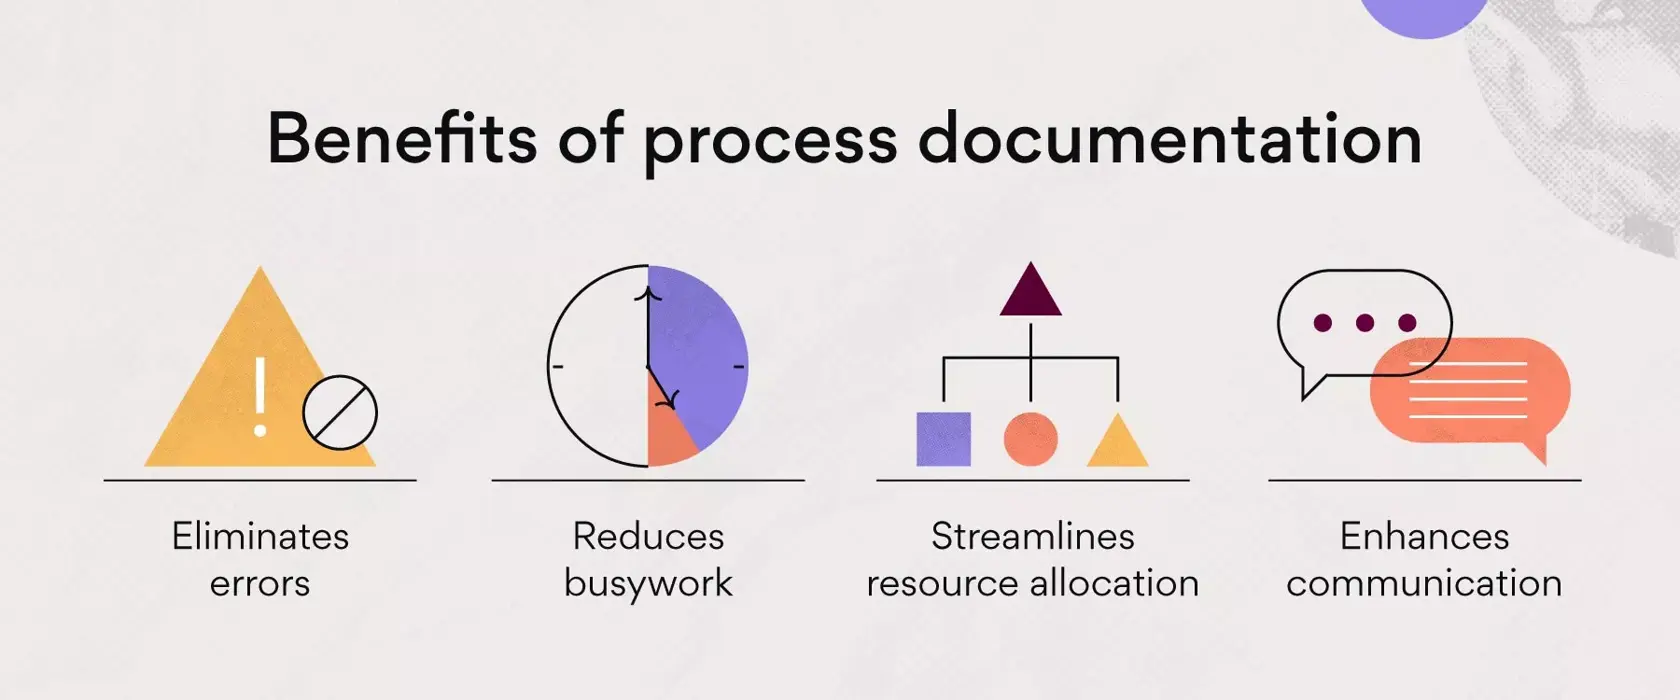 Benefits of process documentation